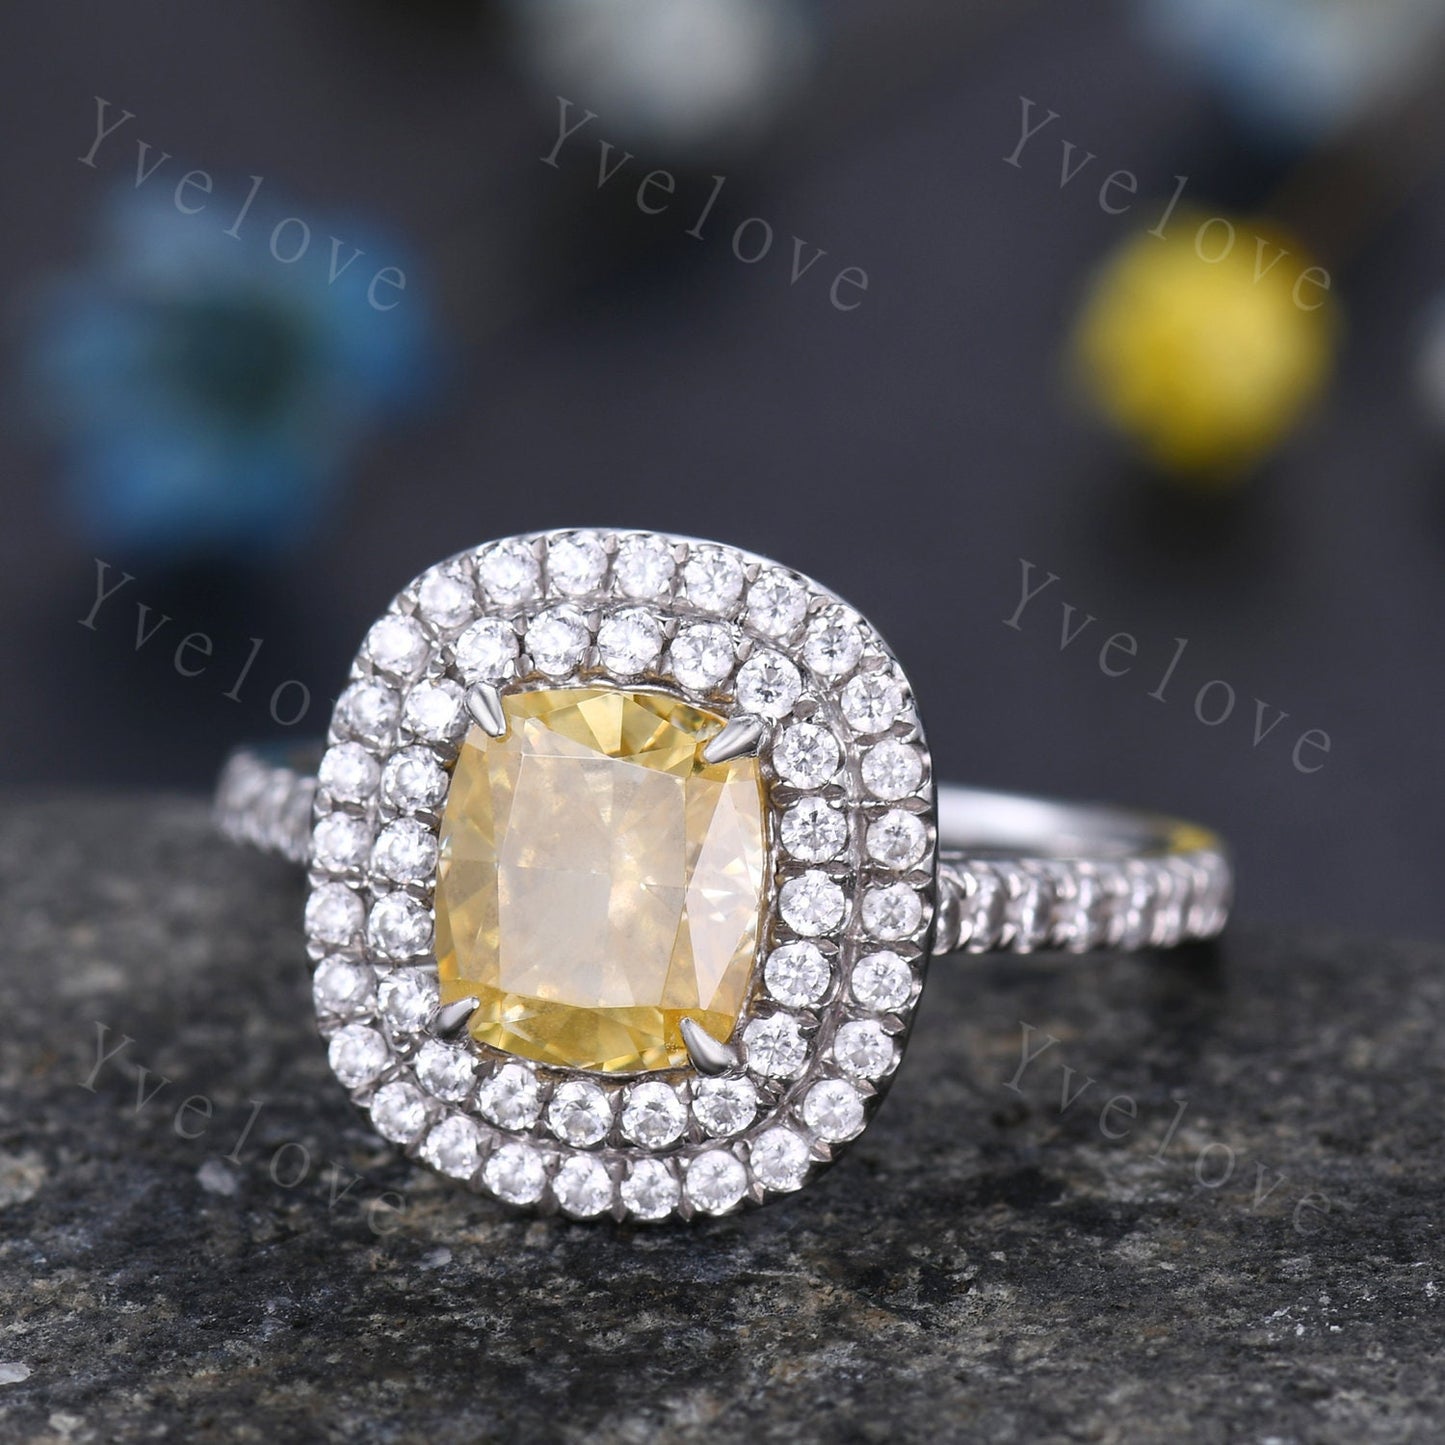 Doule halo Citrine engagement ring 14k white gold Emerald cut yellow citrine wedding ring diamond band November birthstone anniversary ring